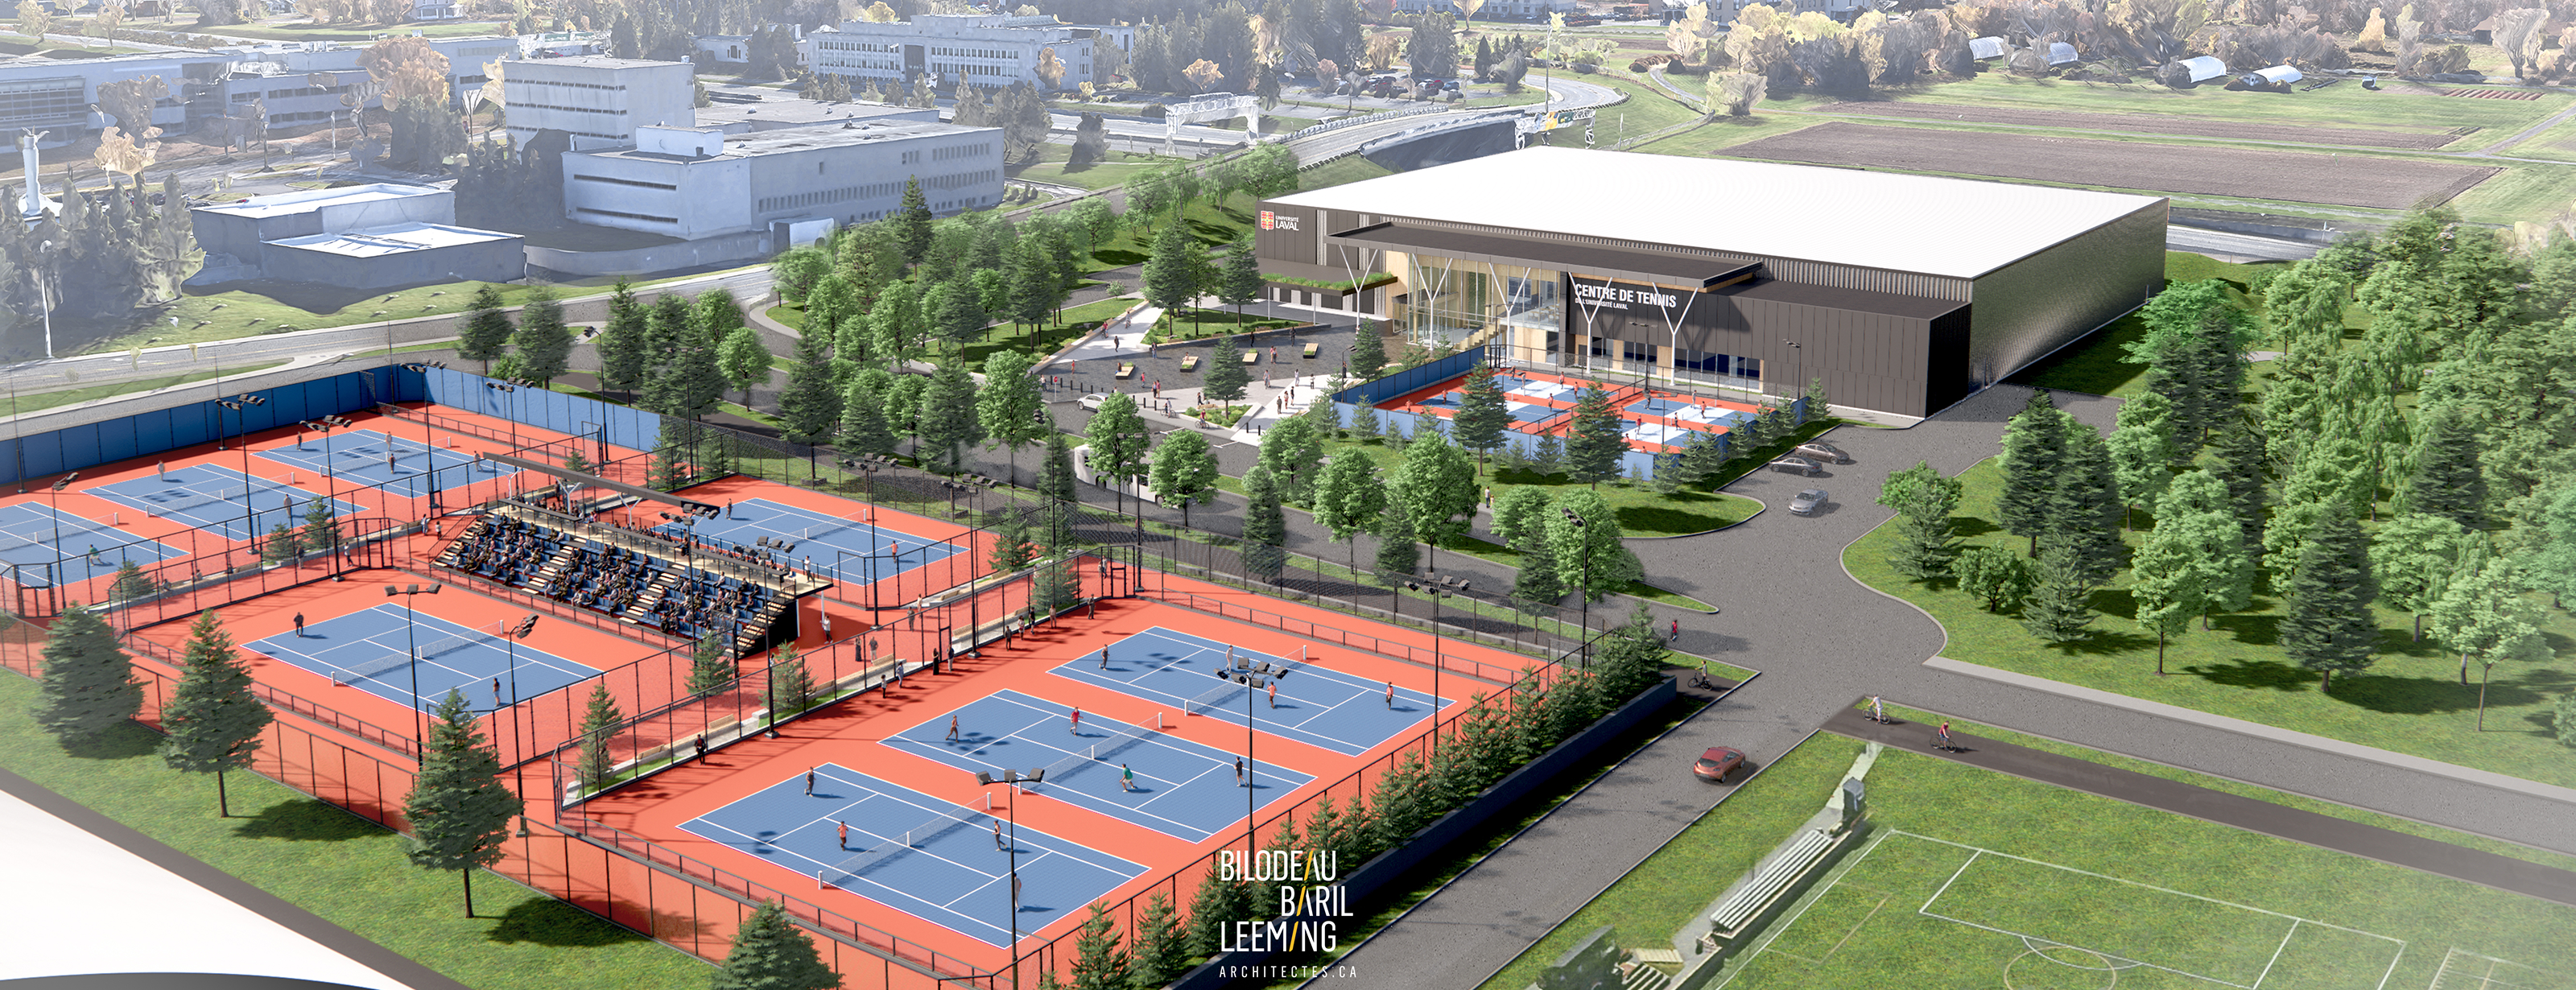 Centre de tennis